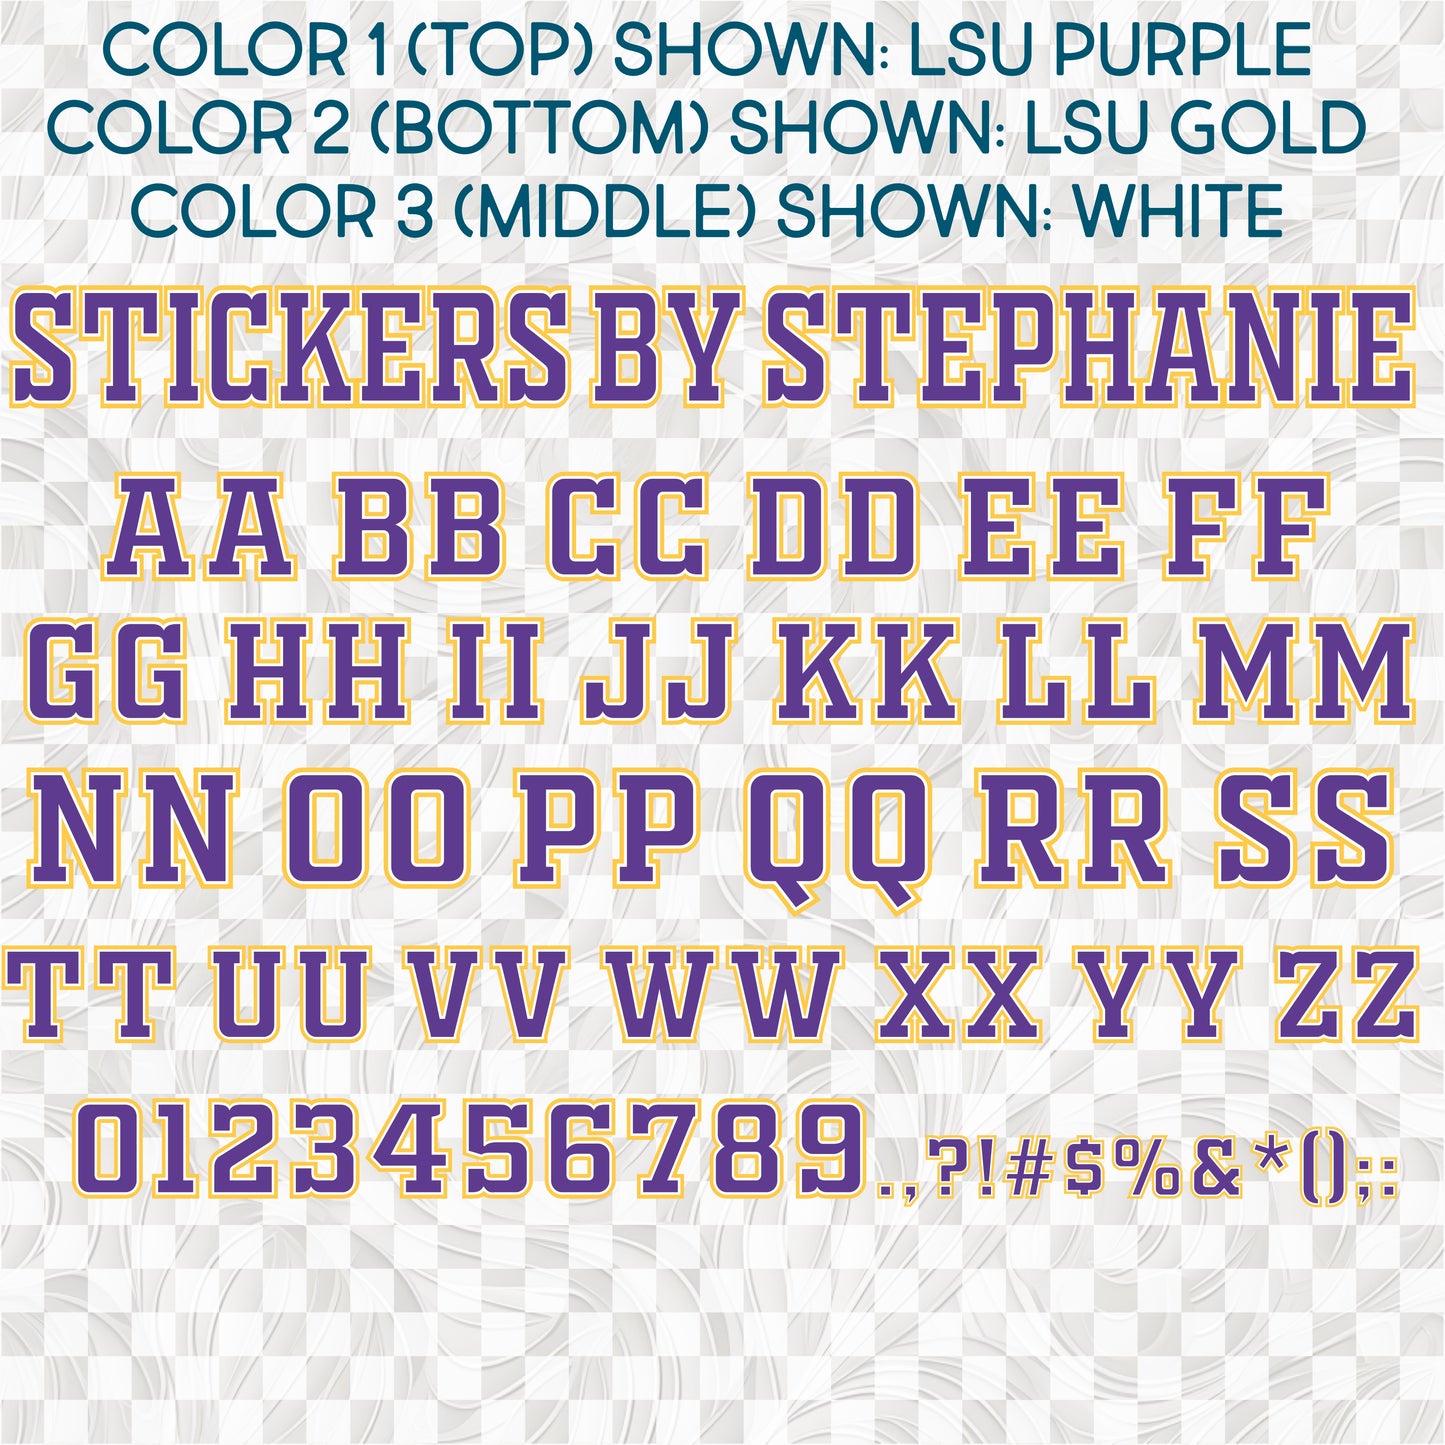 (s097-F21) Block Font Custom Name Text or Single Letter Number Glitter or Vinyl Iron-On Transfer or Sticker